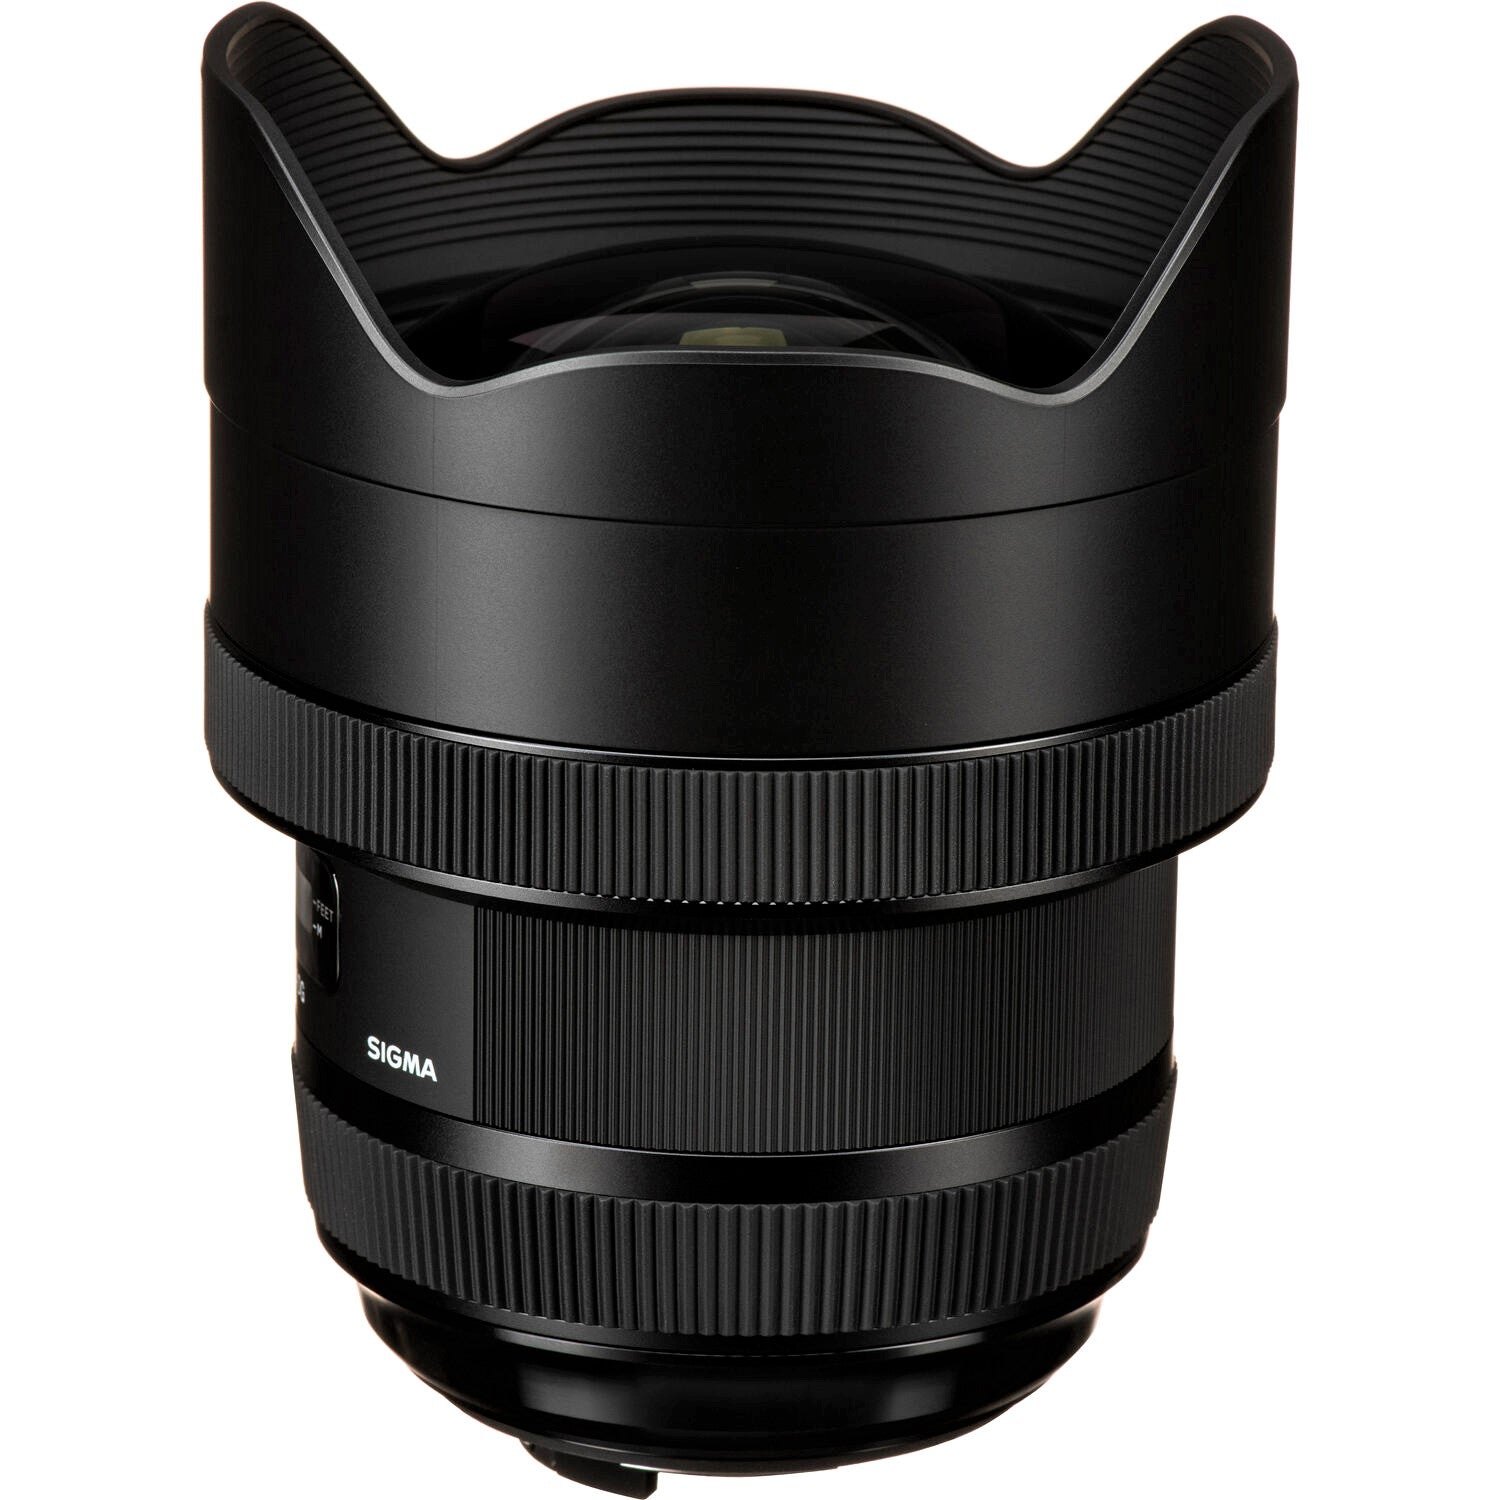 Sigma 12-24mm F4.0 DG HSM Art Lens for Nikon F